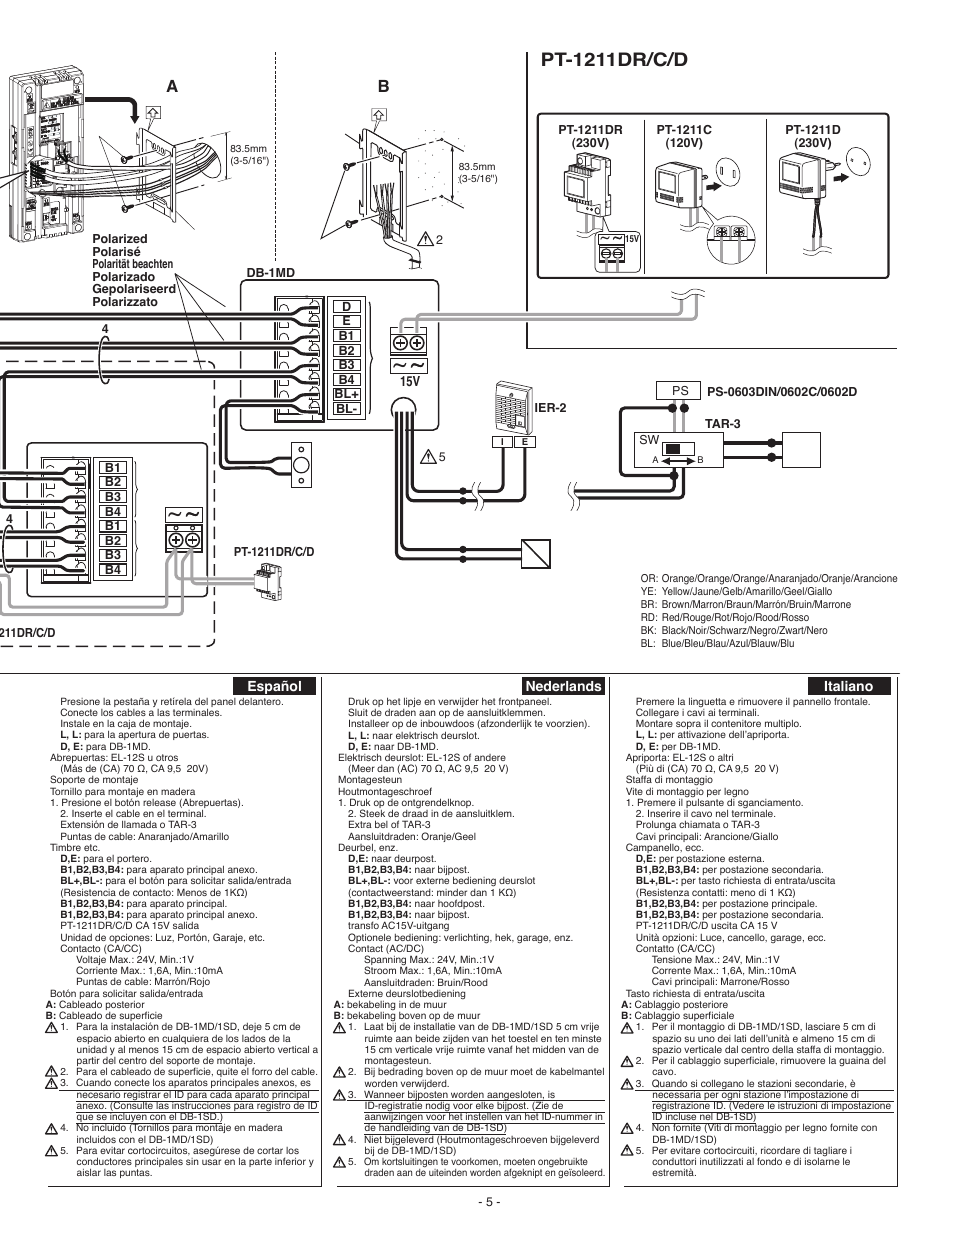 Da-1ds db-1md db-1sd, Pt-1211dr/c/d, L l d e | Aiphone DA-1DS User Manual |  Page 5 / 8 | Original mode